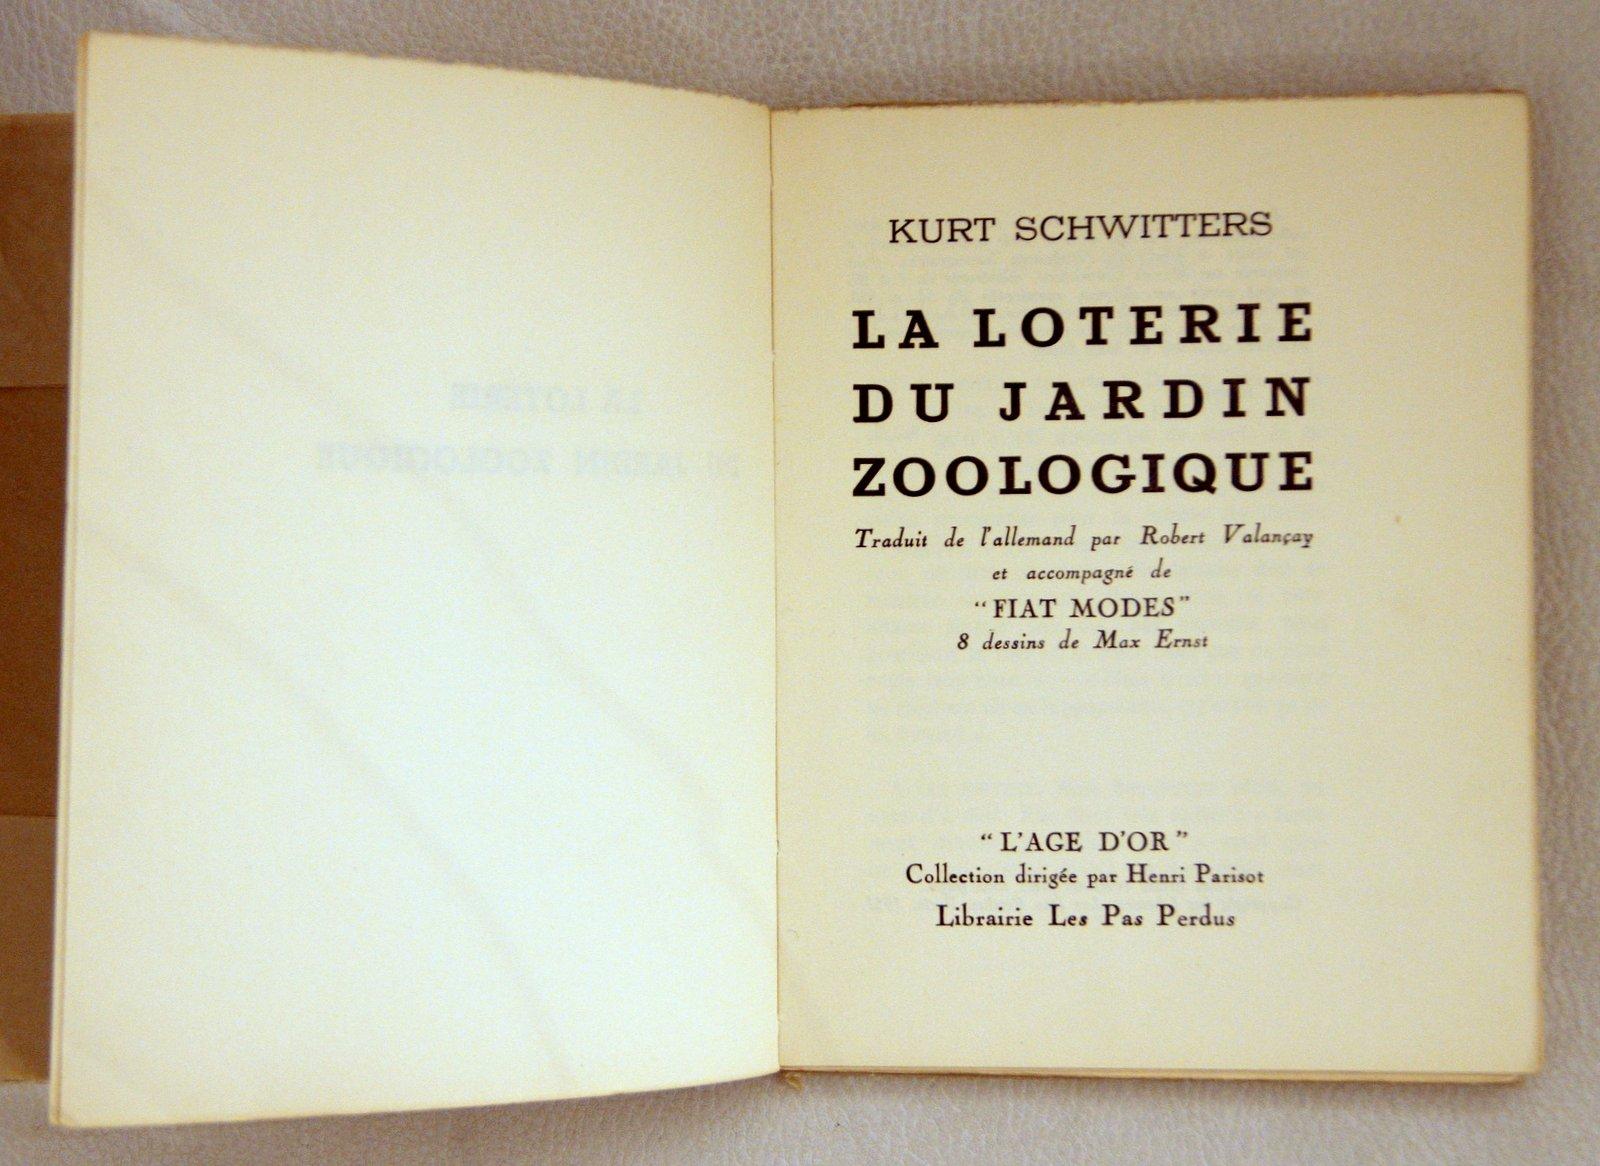 La Loterie du Jardin Zoologique - Rare Book illustrated by Kurt Schwittes - 1951 For Sale 1